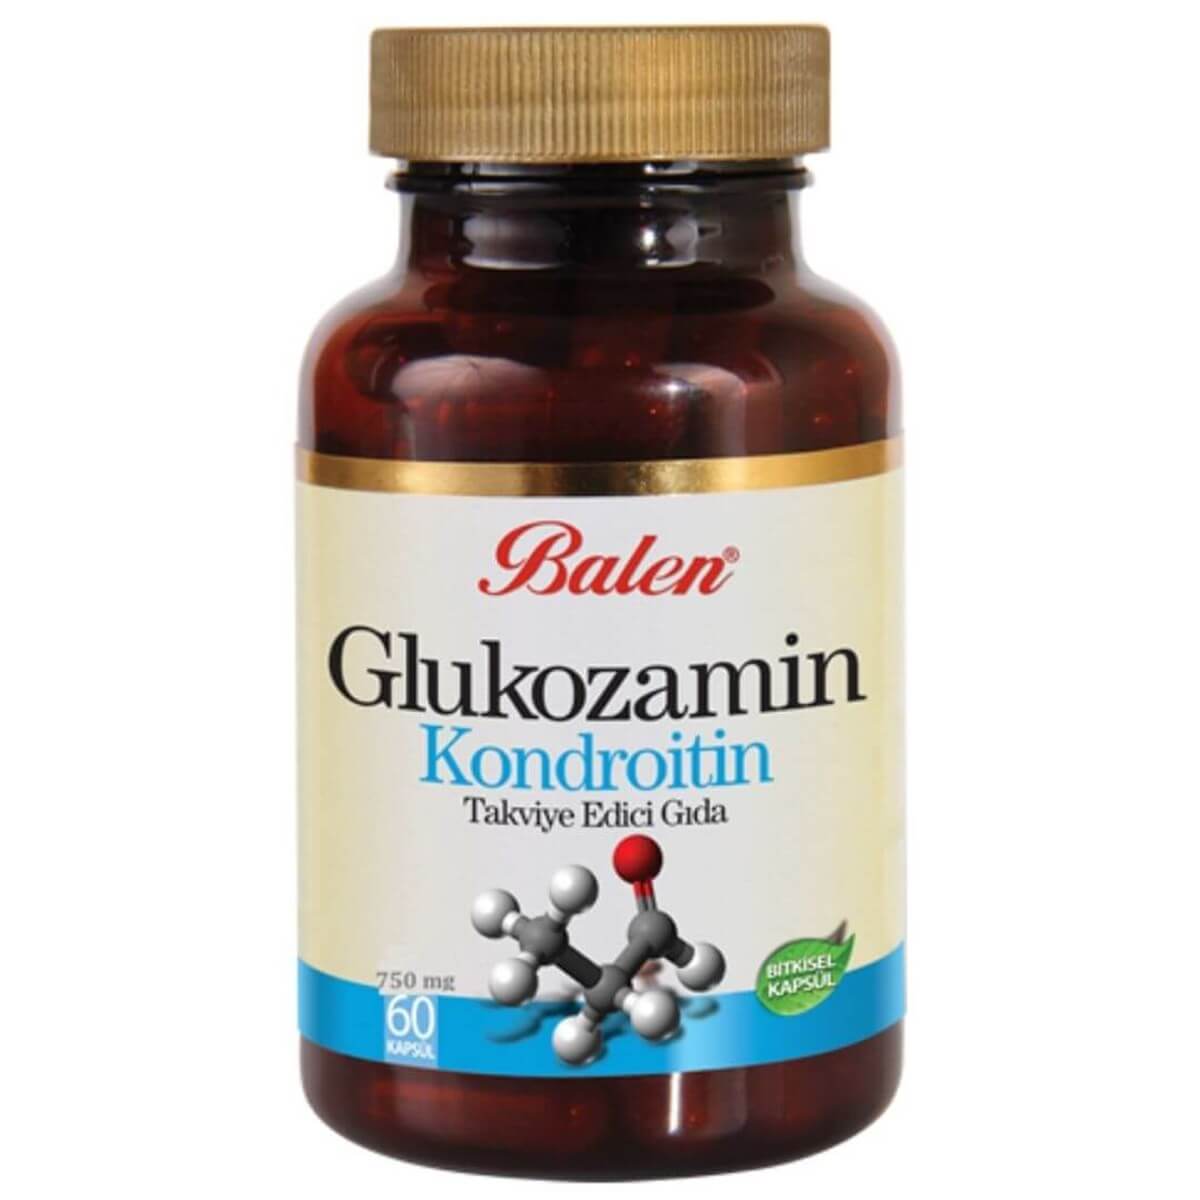 Balen Glukozamin Kondroitin 60 Kapsül X 750 mg